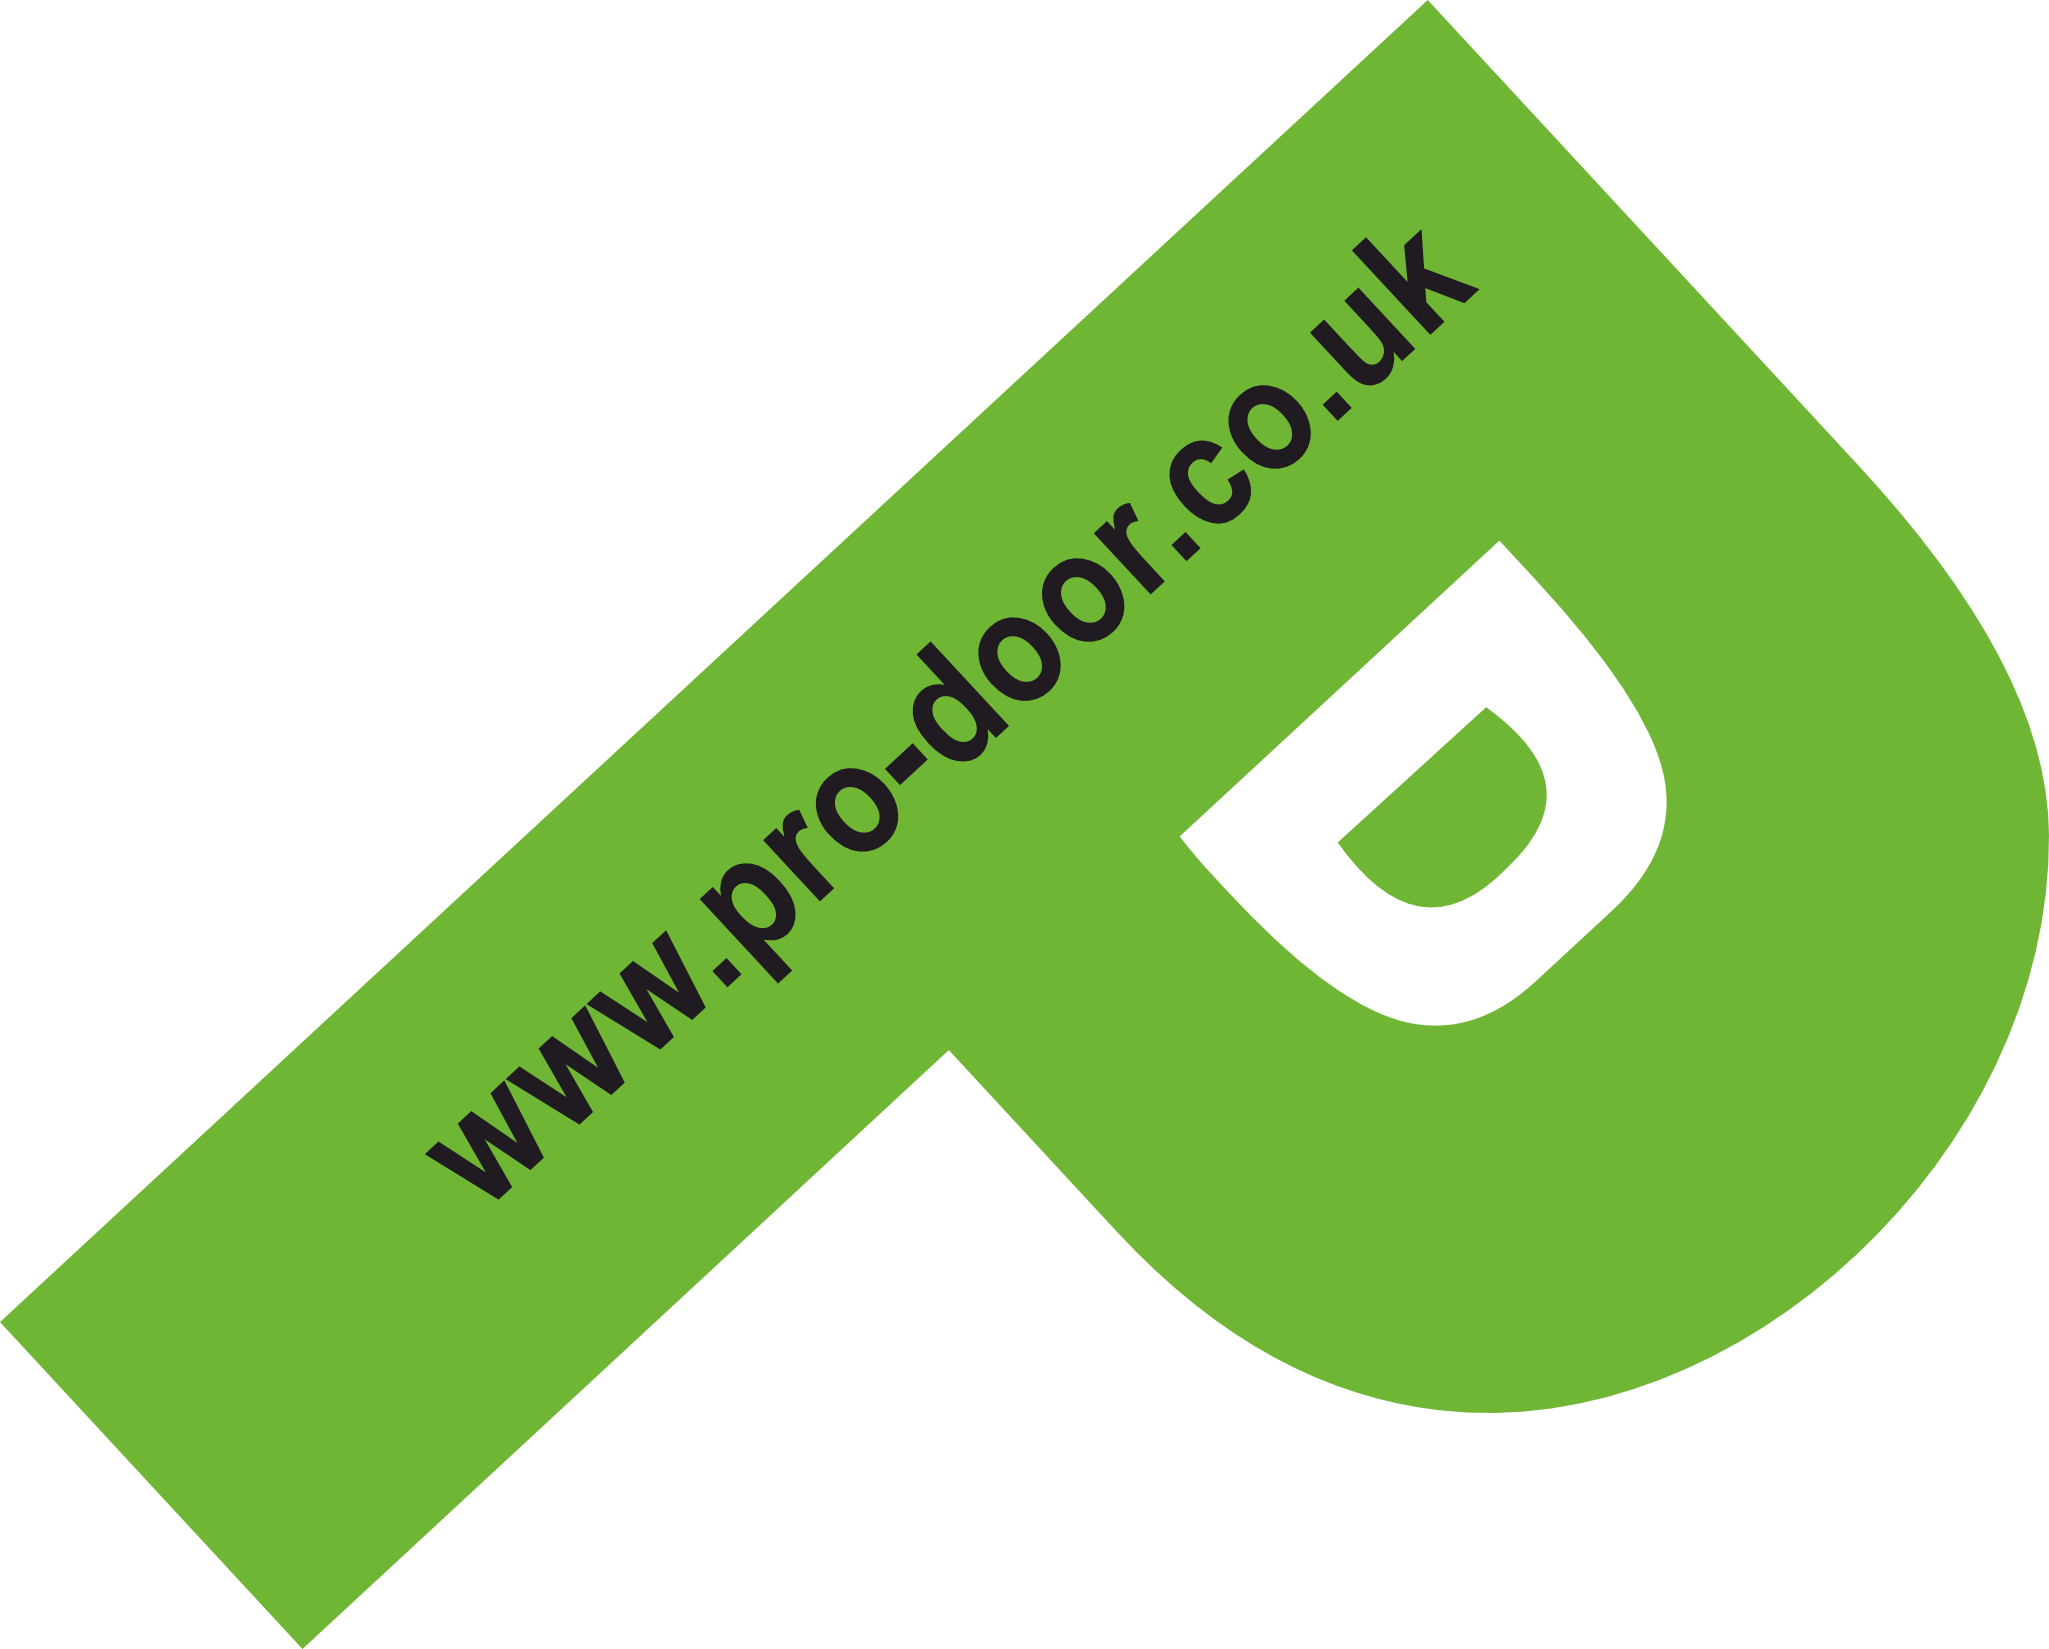 prodoor single logo